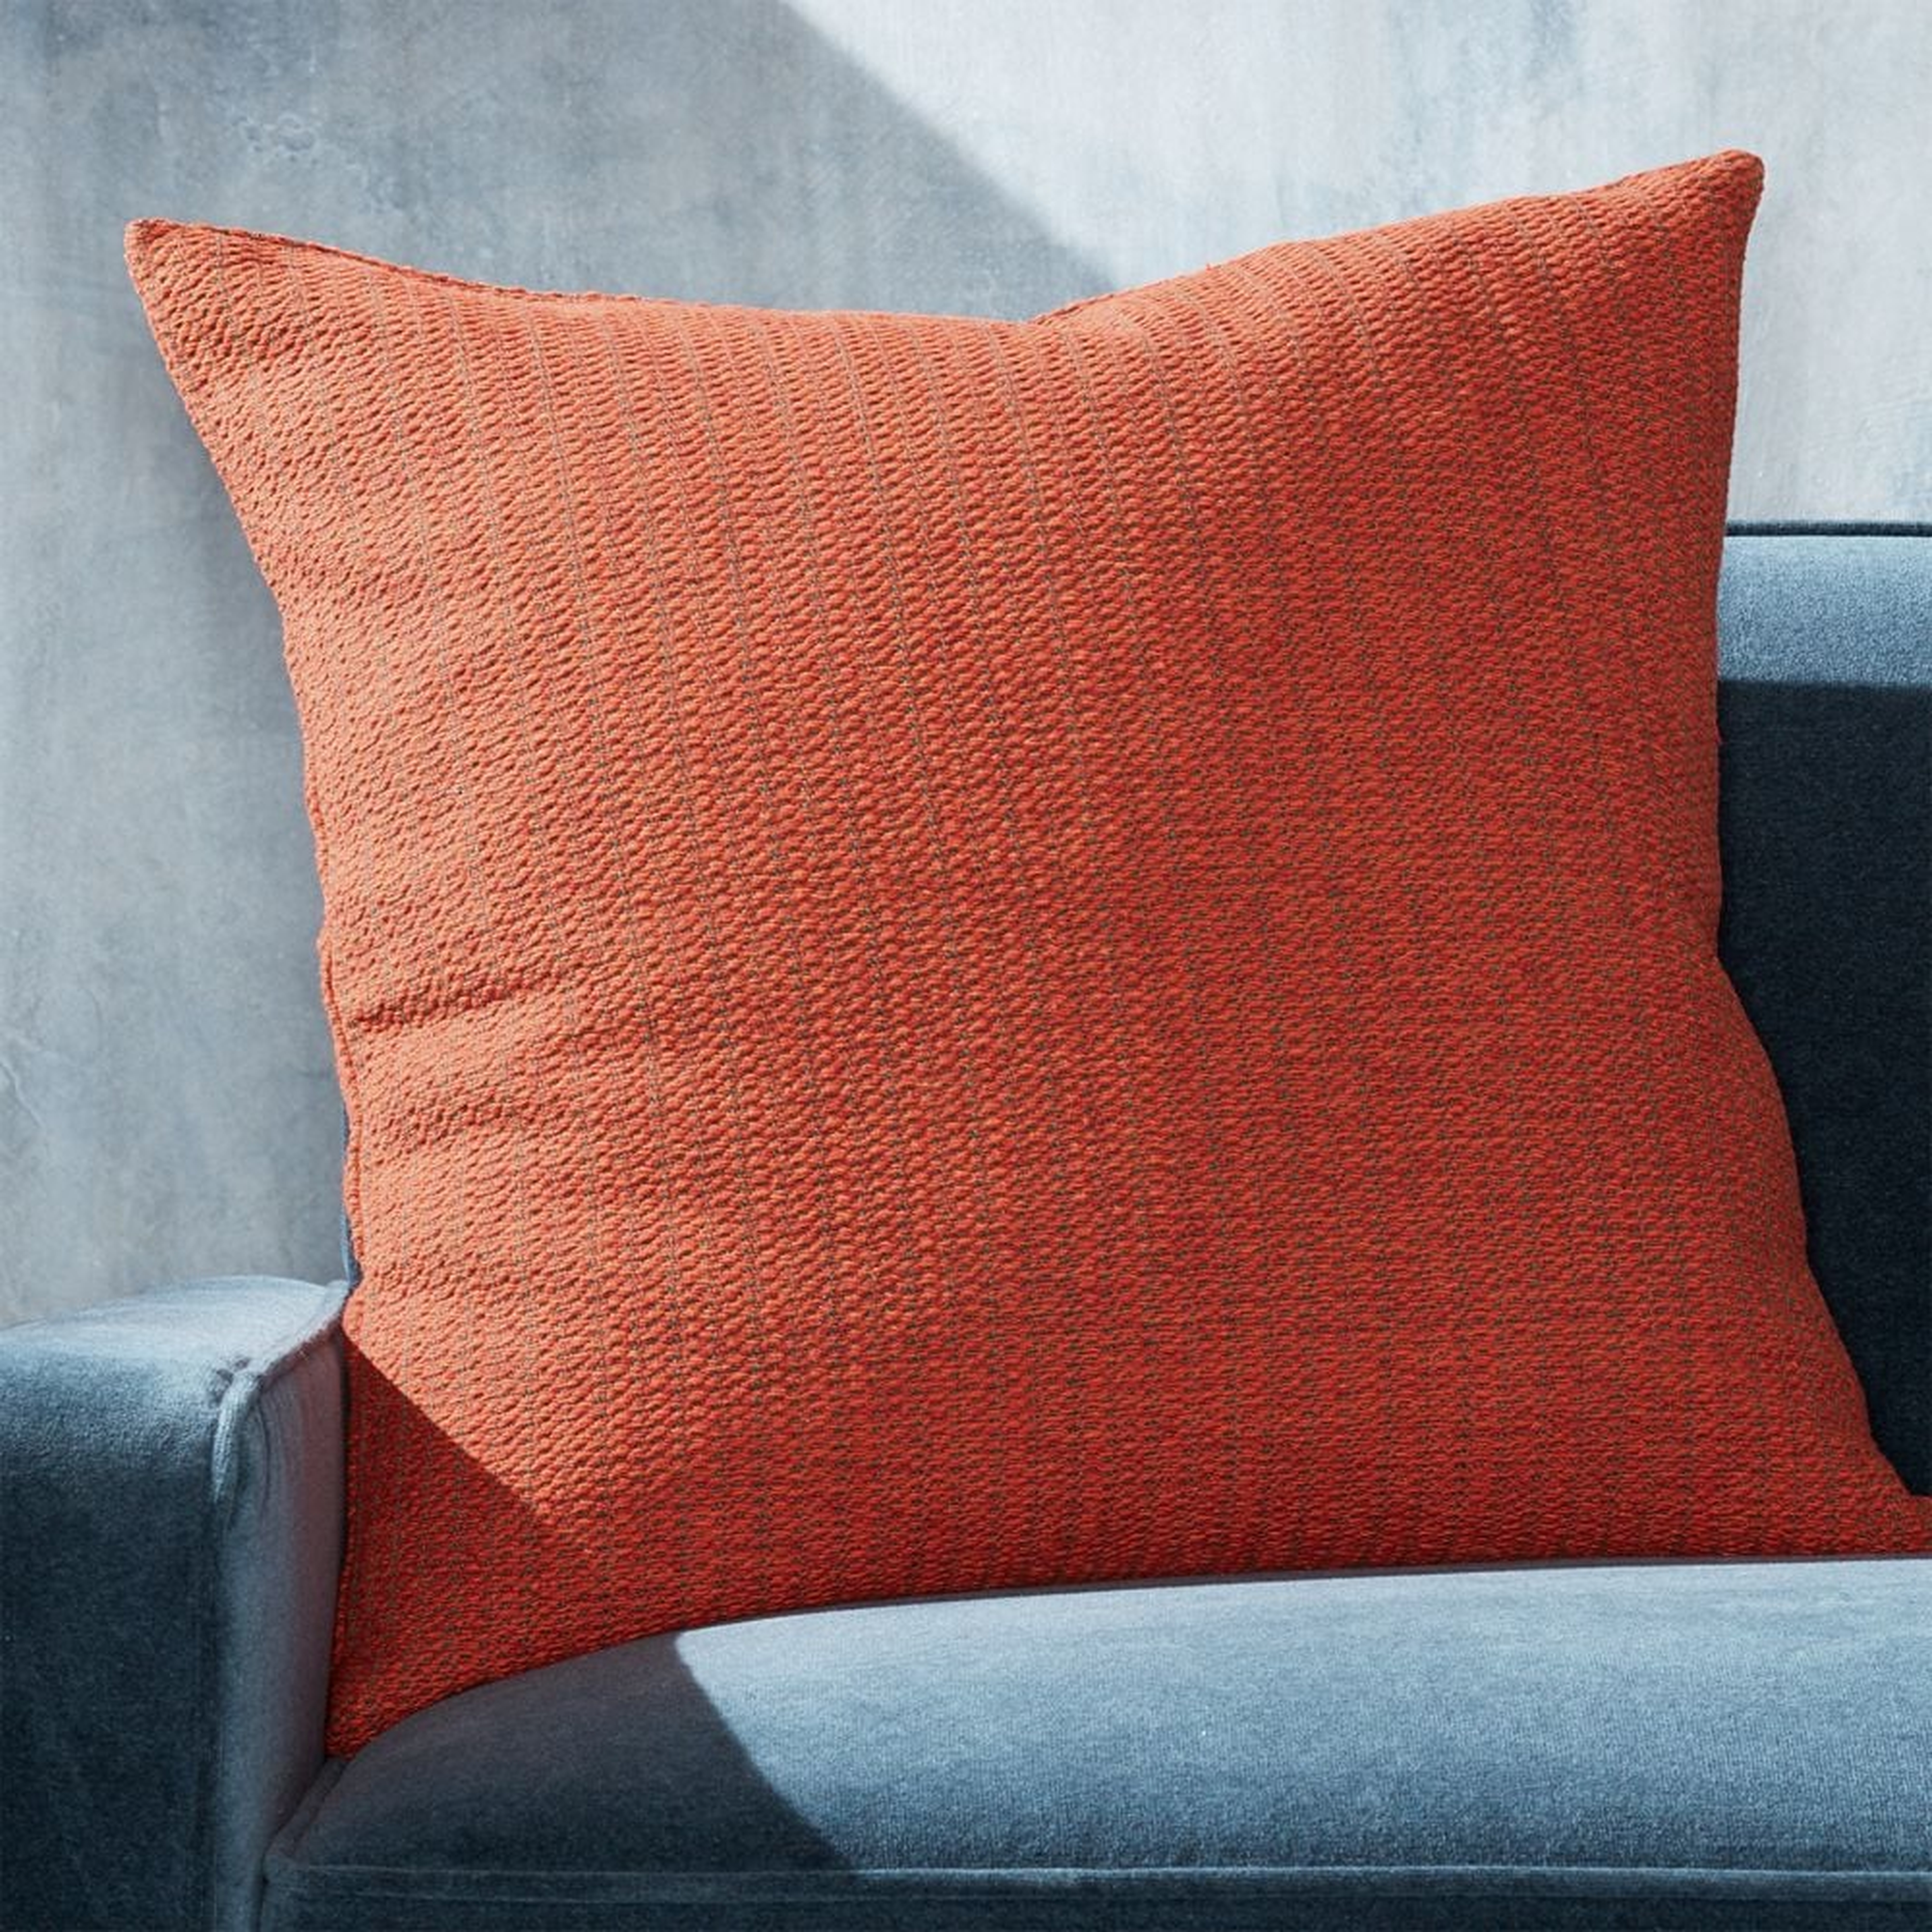 Liano Orange Monochrome Pillow with Down-Alternative Insert 23" - Crate and Barrel